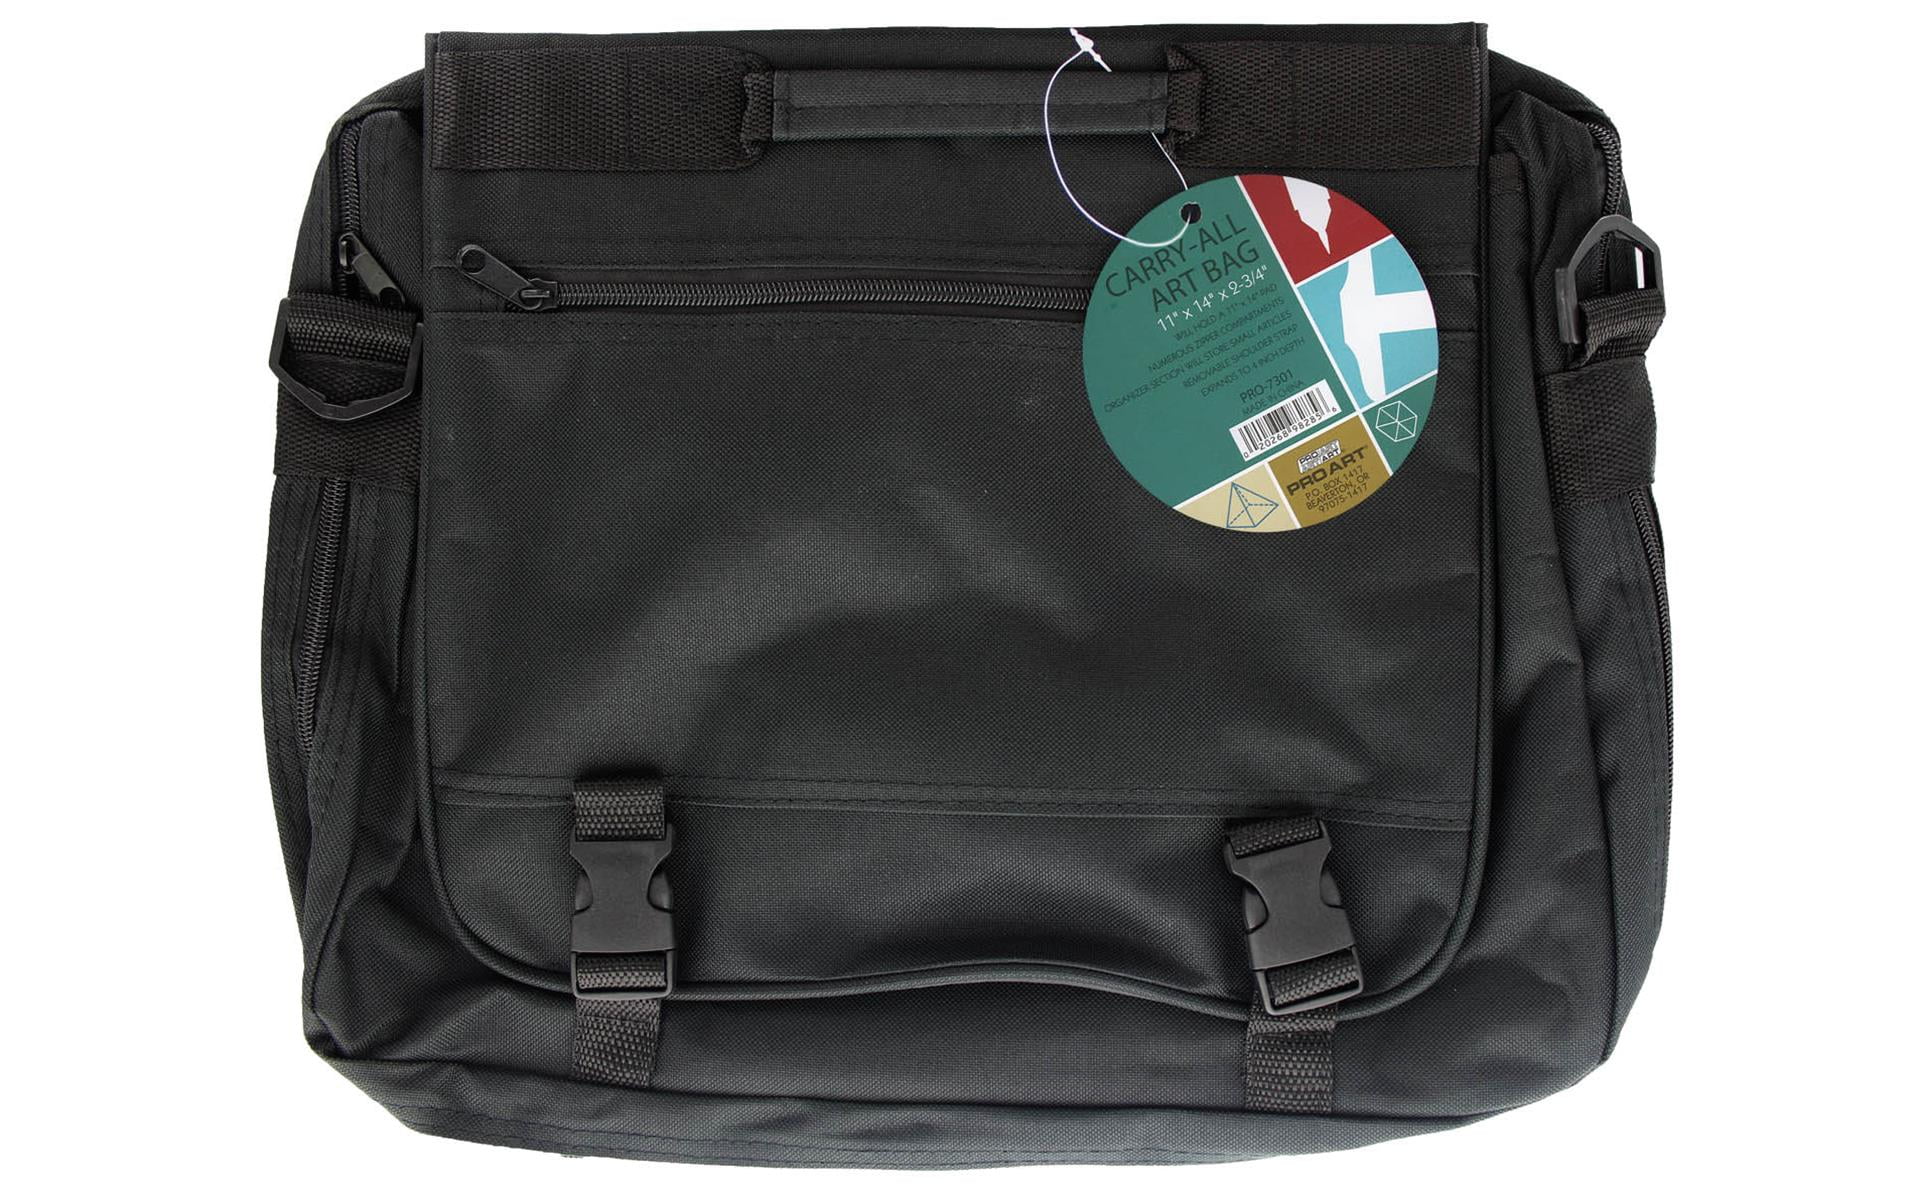 Pro Art Messinger Art Supply Bag 19x15x2.75 